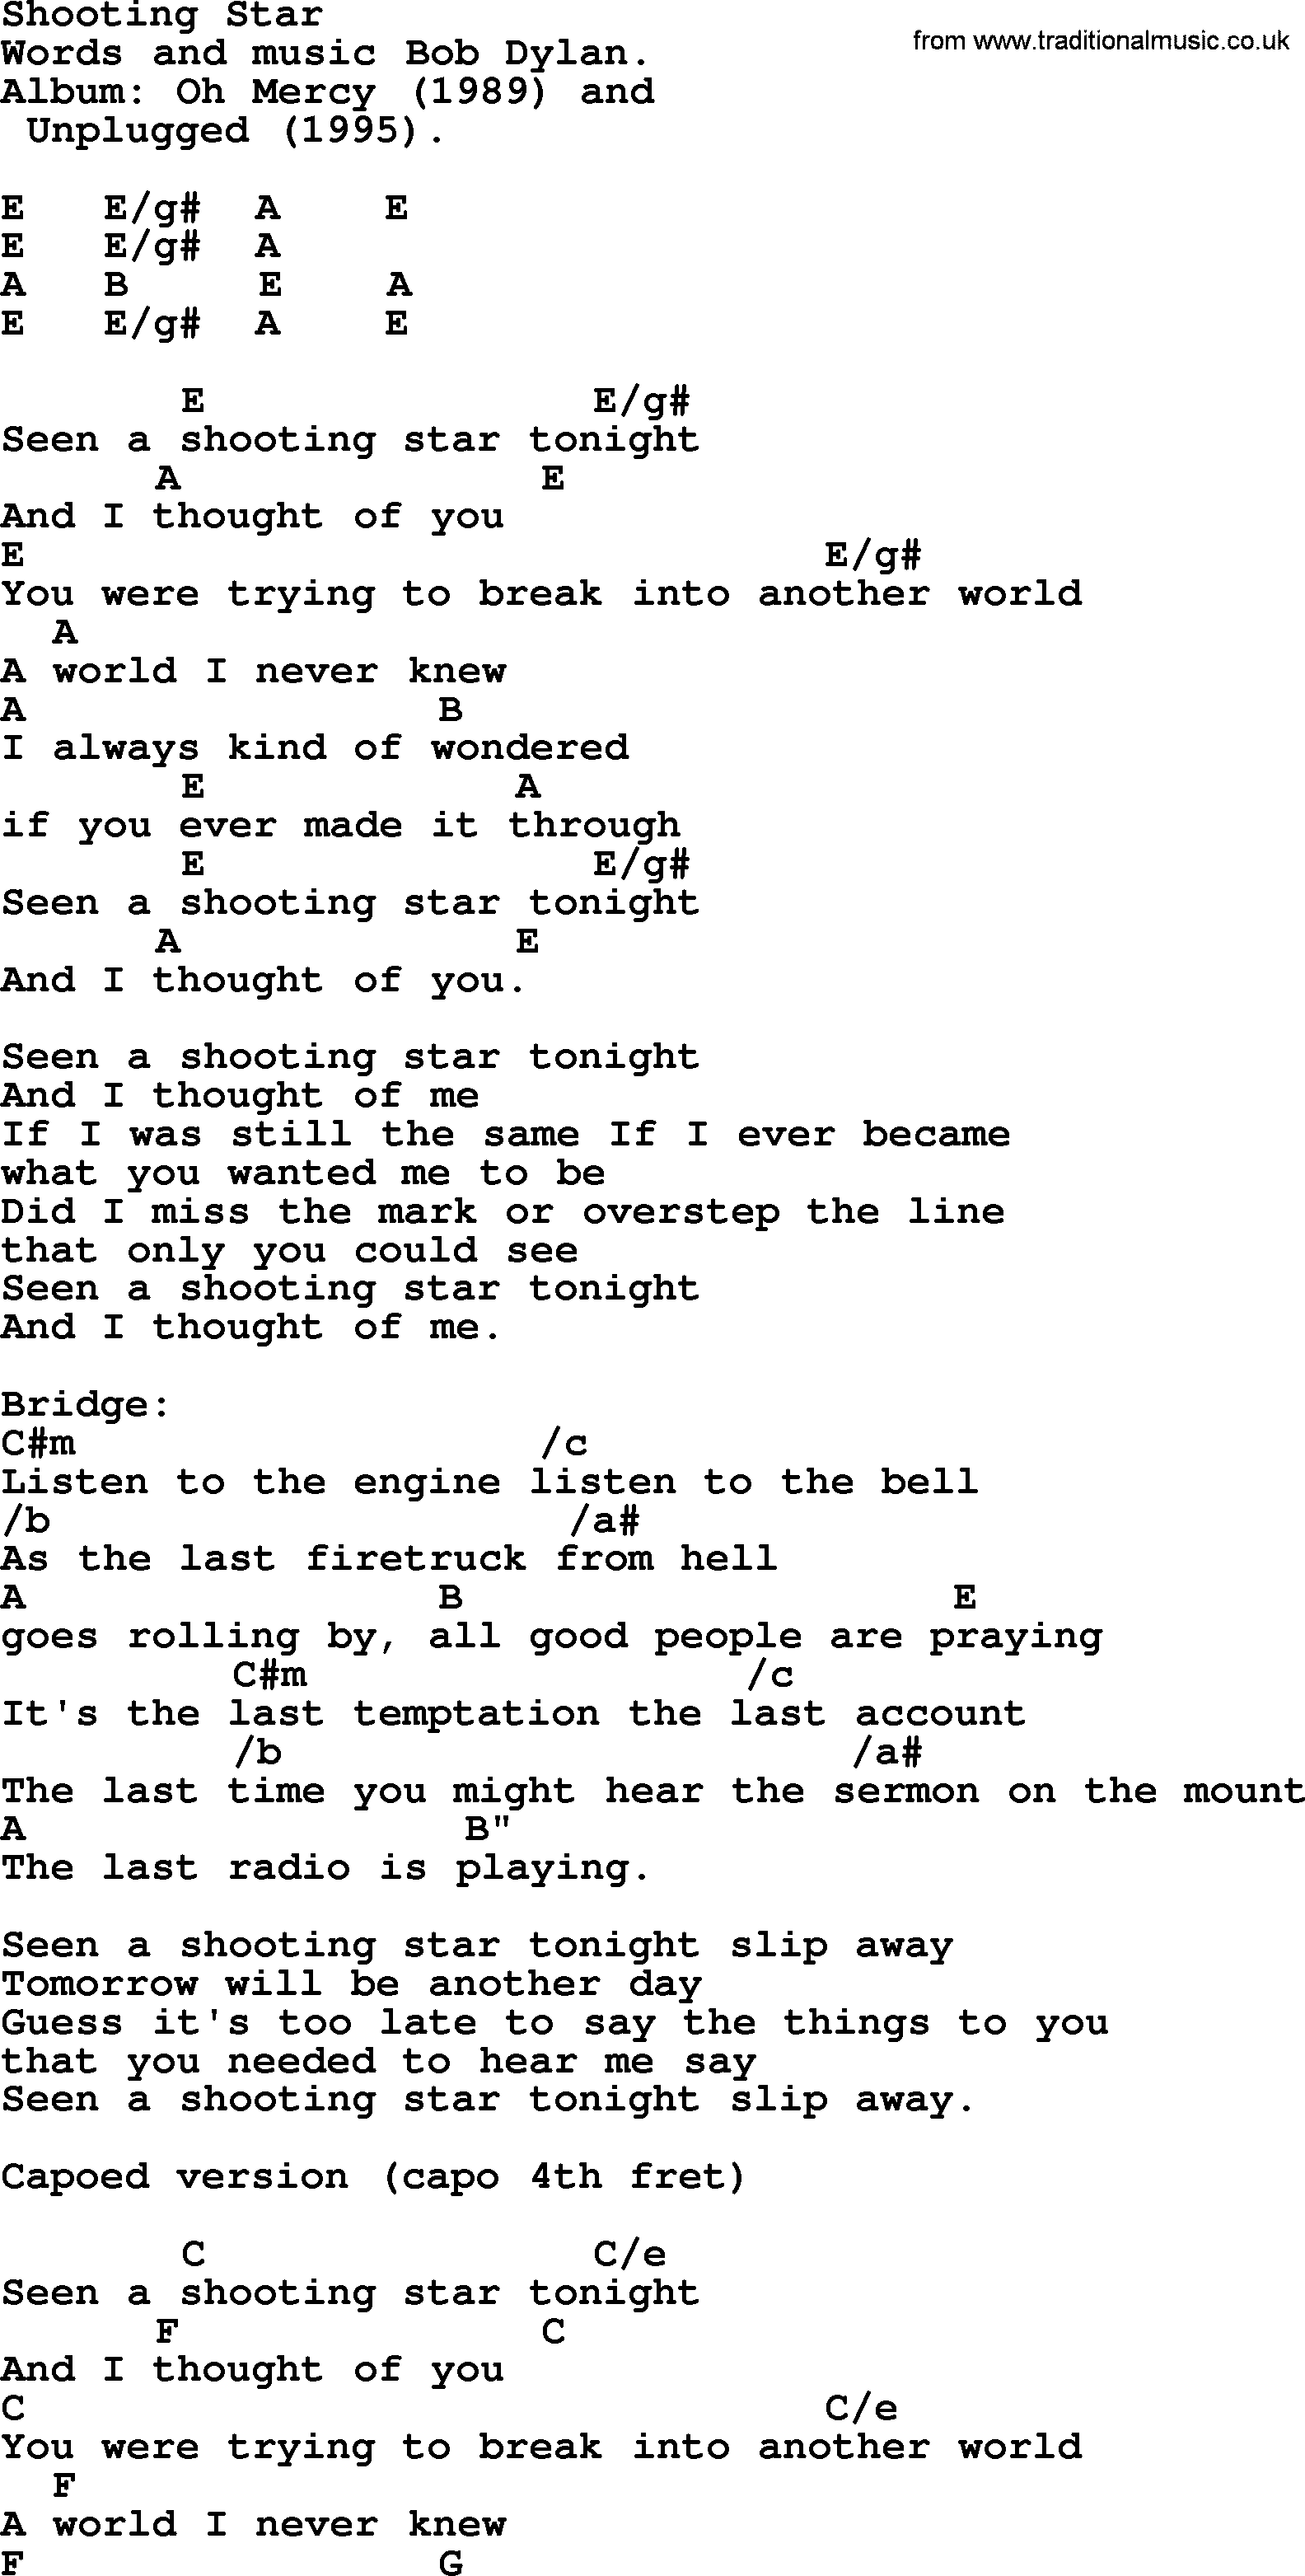 Bob Dylan song, lyrics with chords - Shooting Star